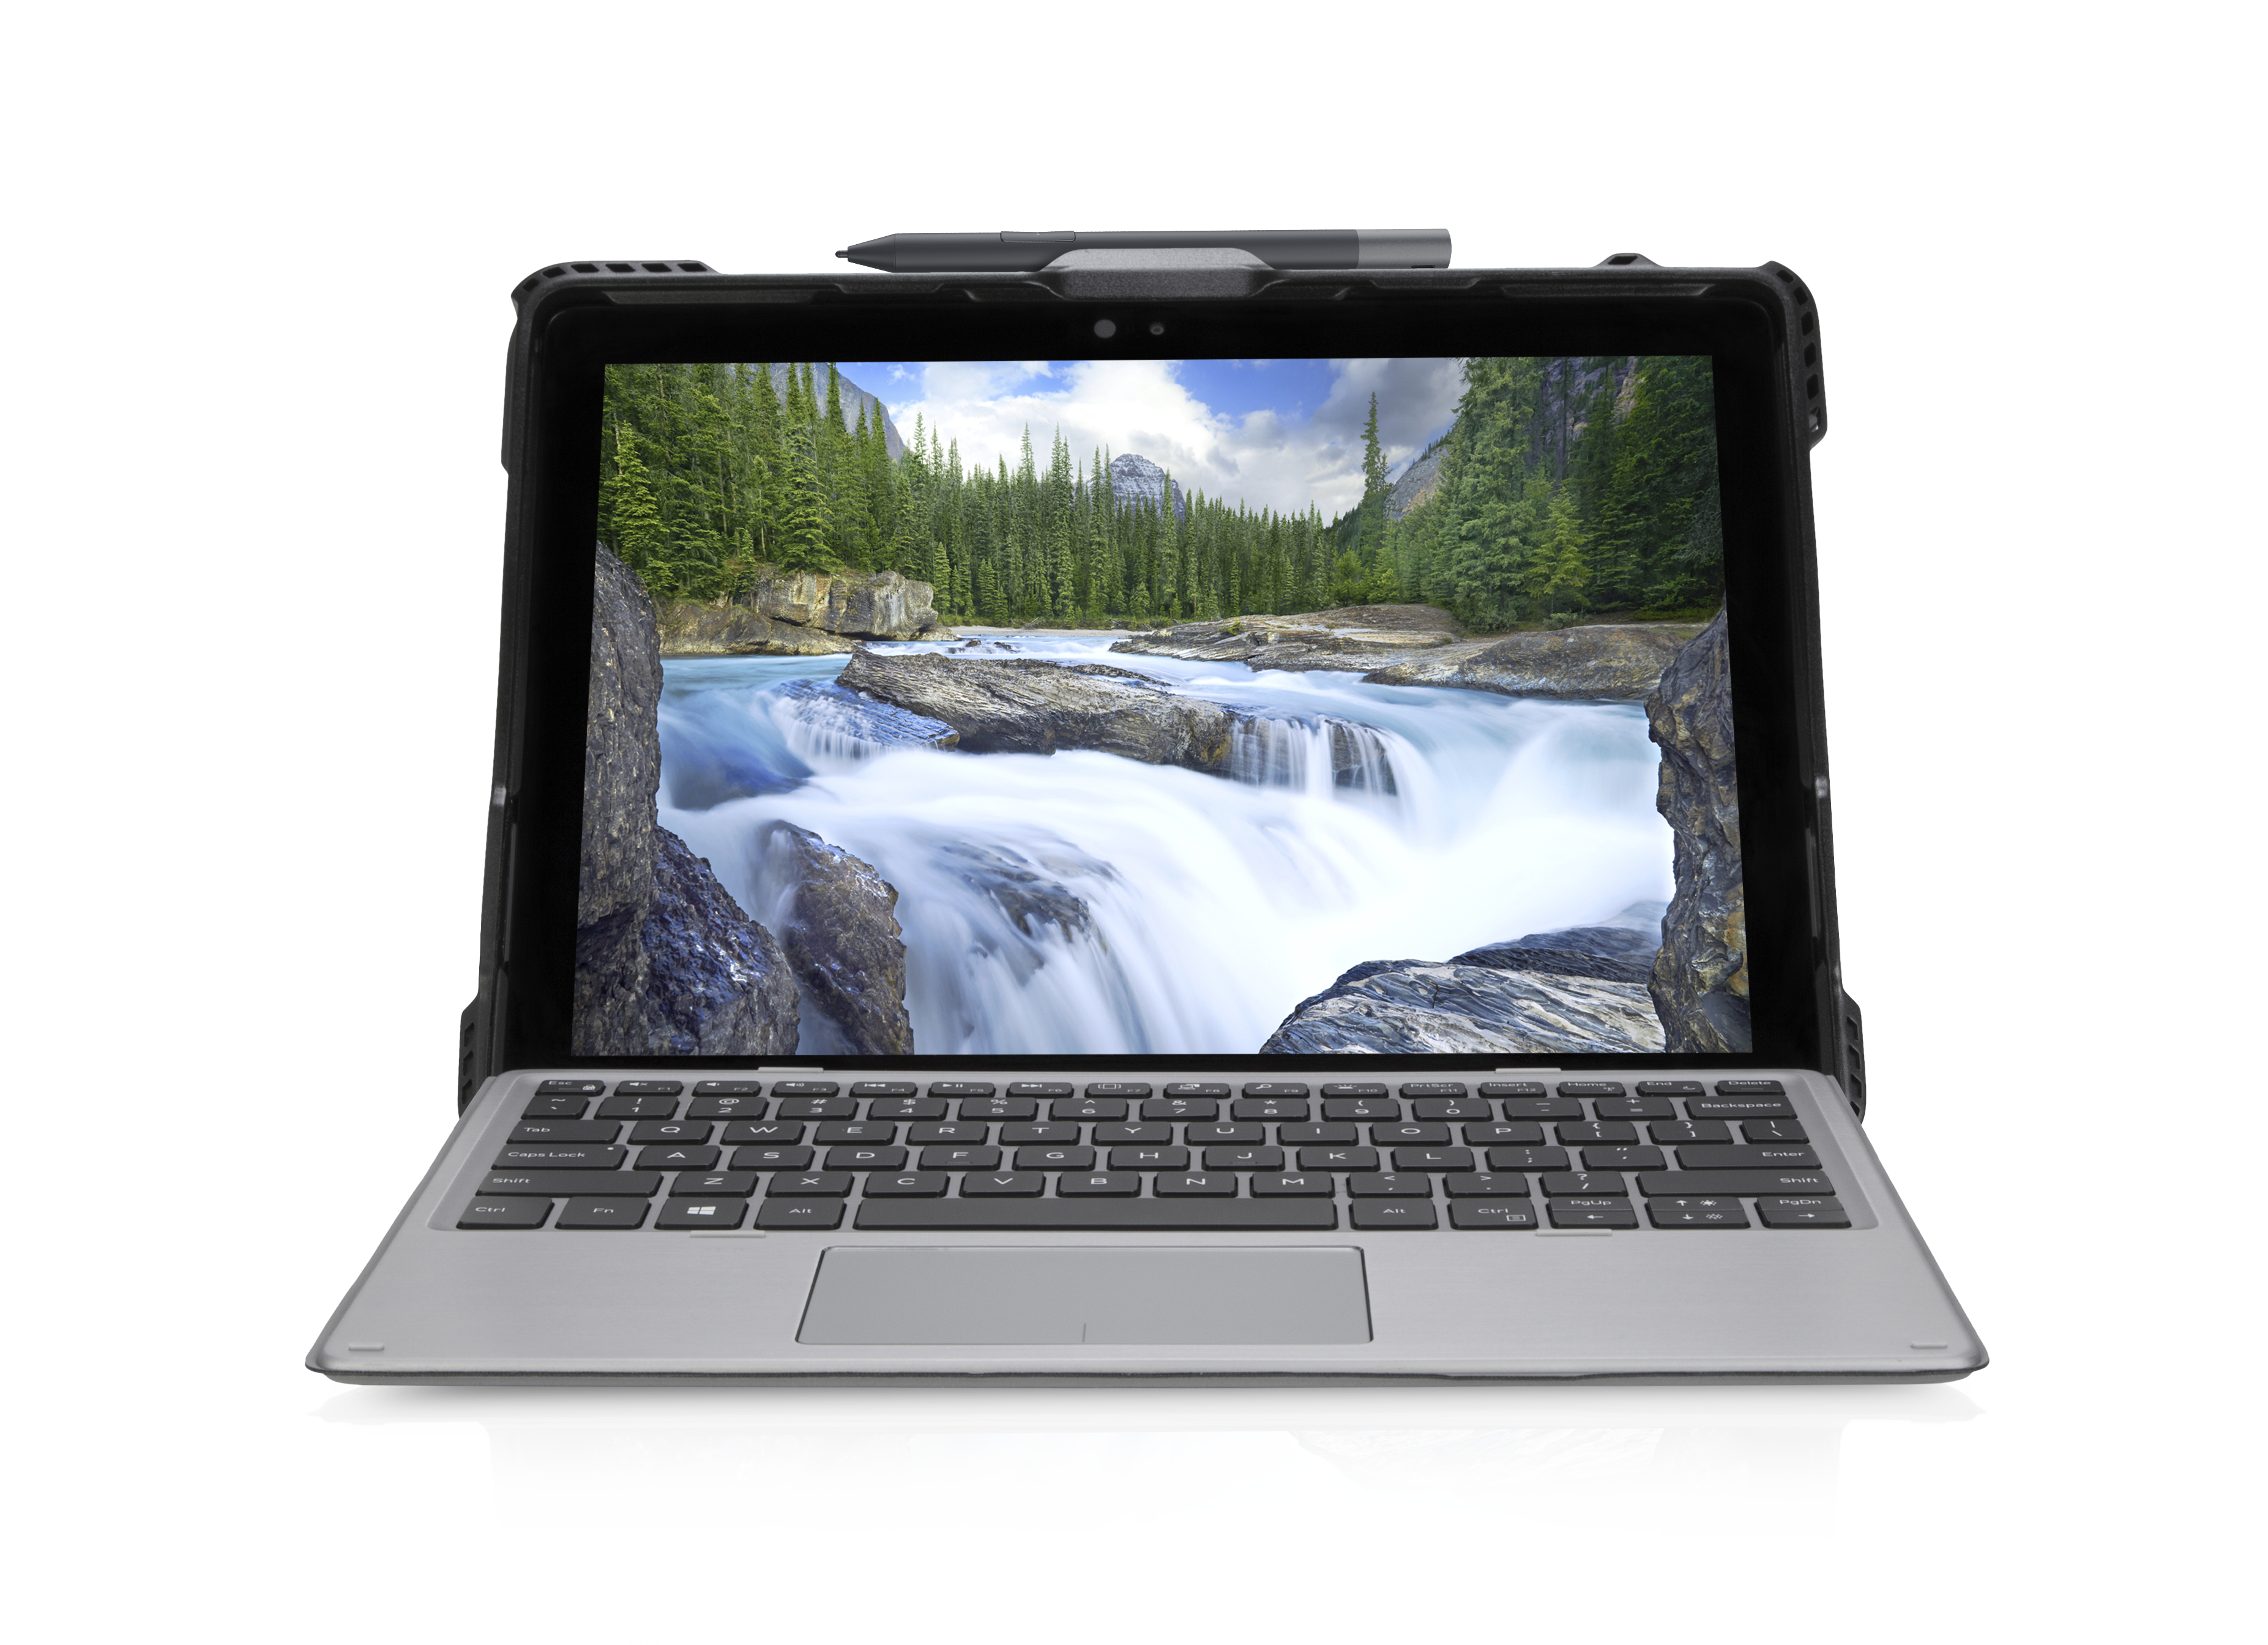 Dell Commercial Grade Case - Tablet-PC-Schutzhülle